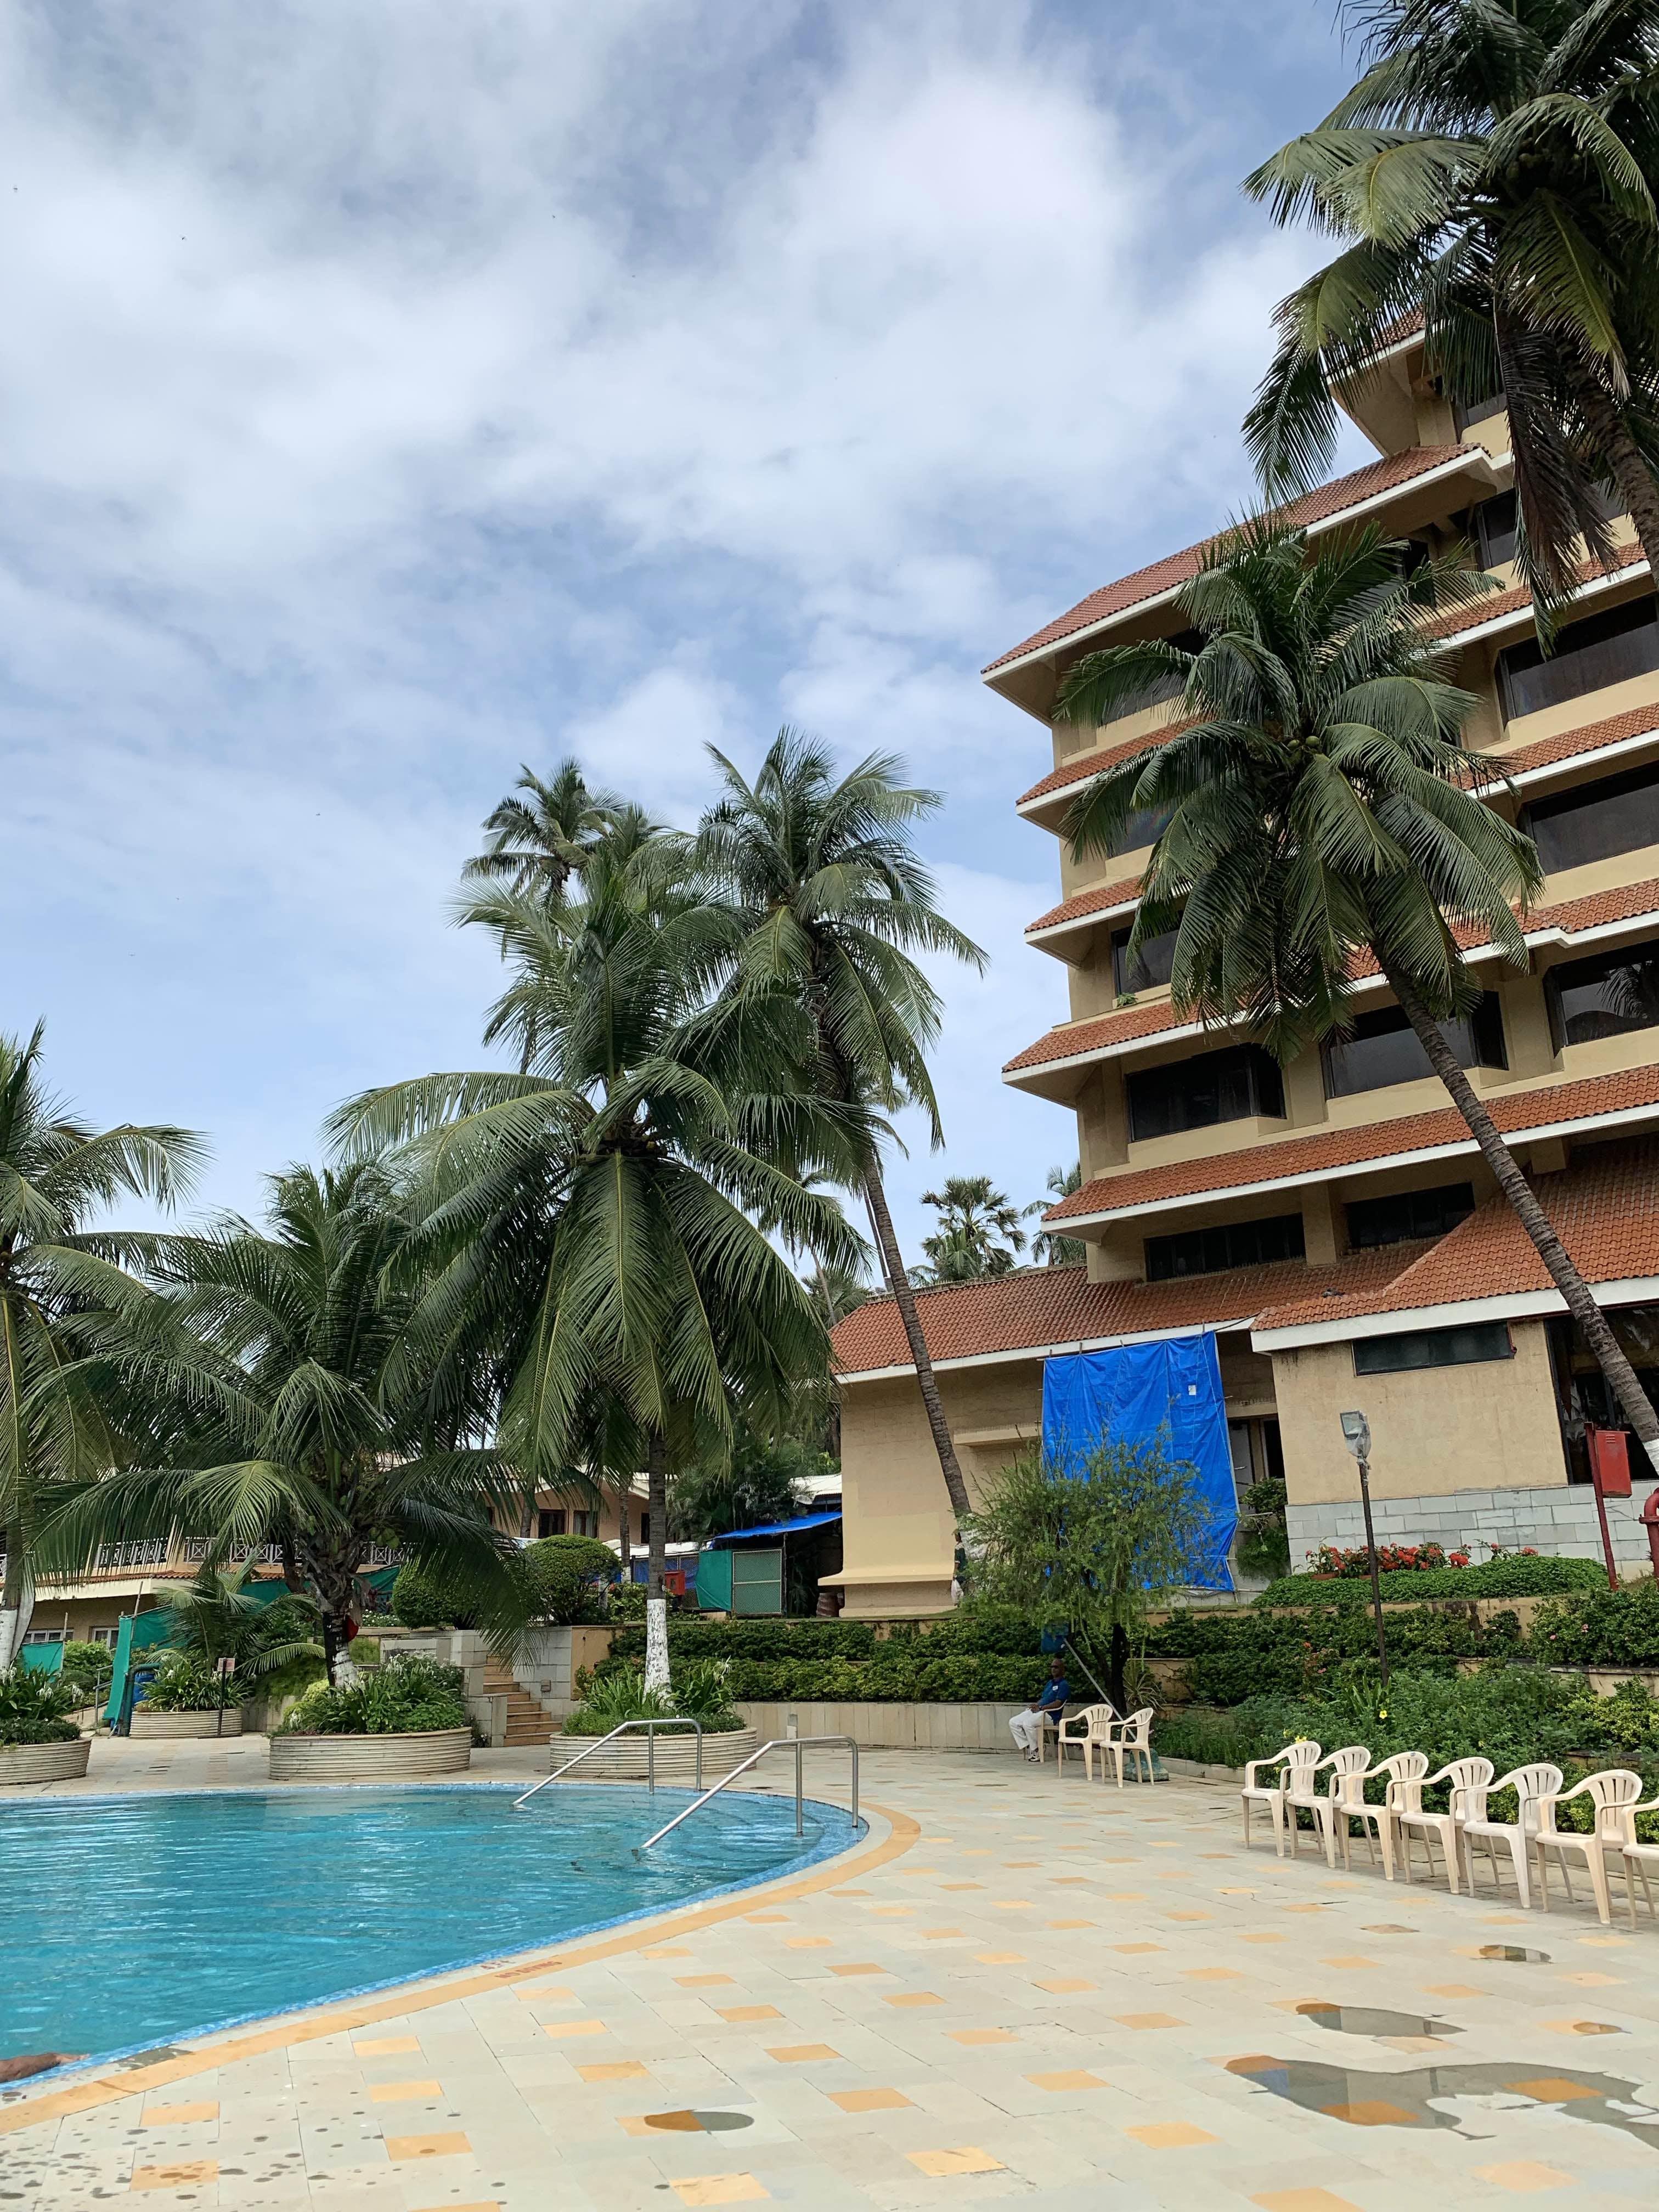 Resort,Swimming pool,Vacation,Building,Tree,Hotel,Leisure,Palm tree,Condominium,Sky